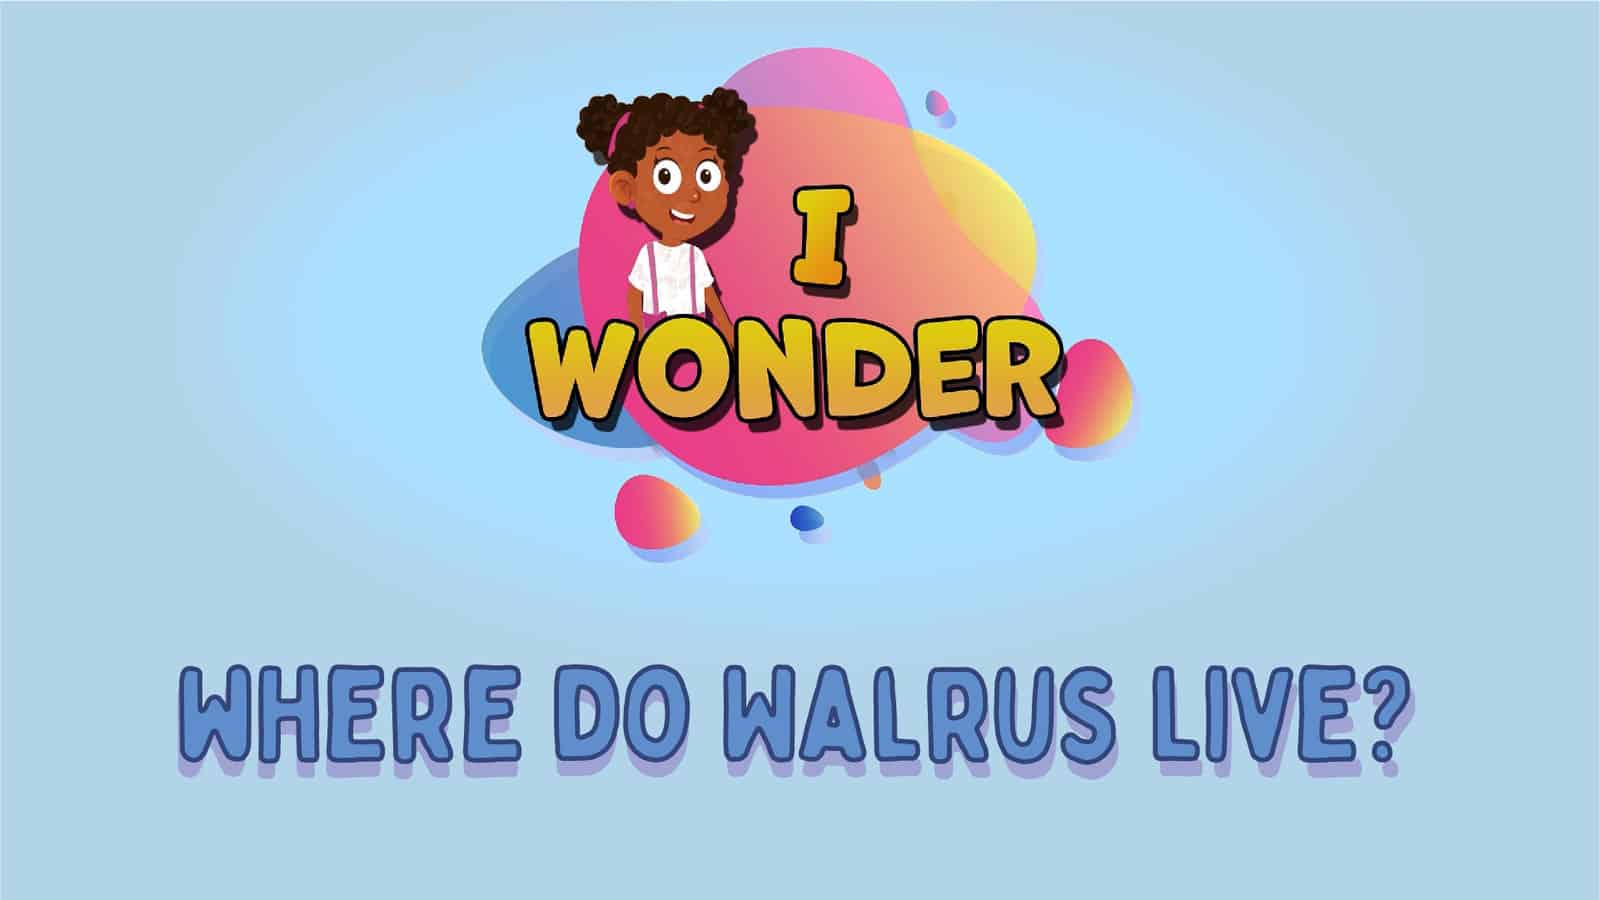 Where Do Walrus Live?